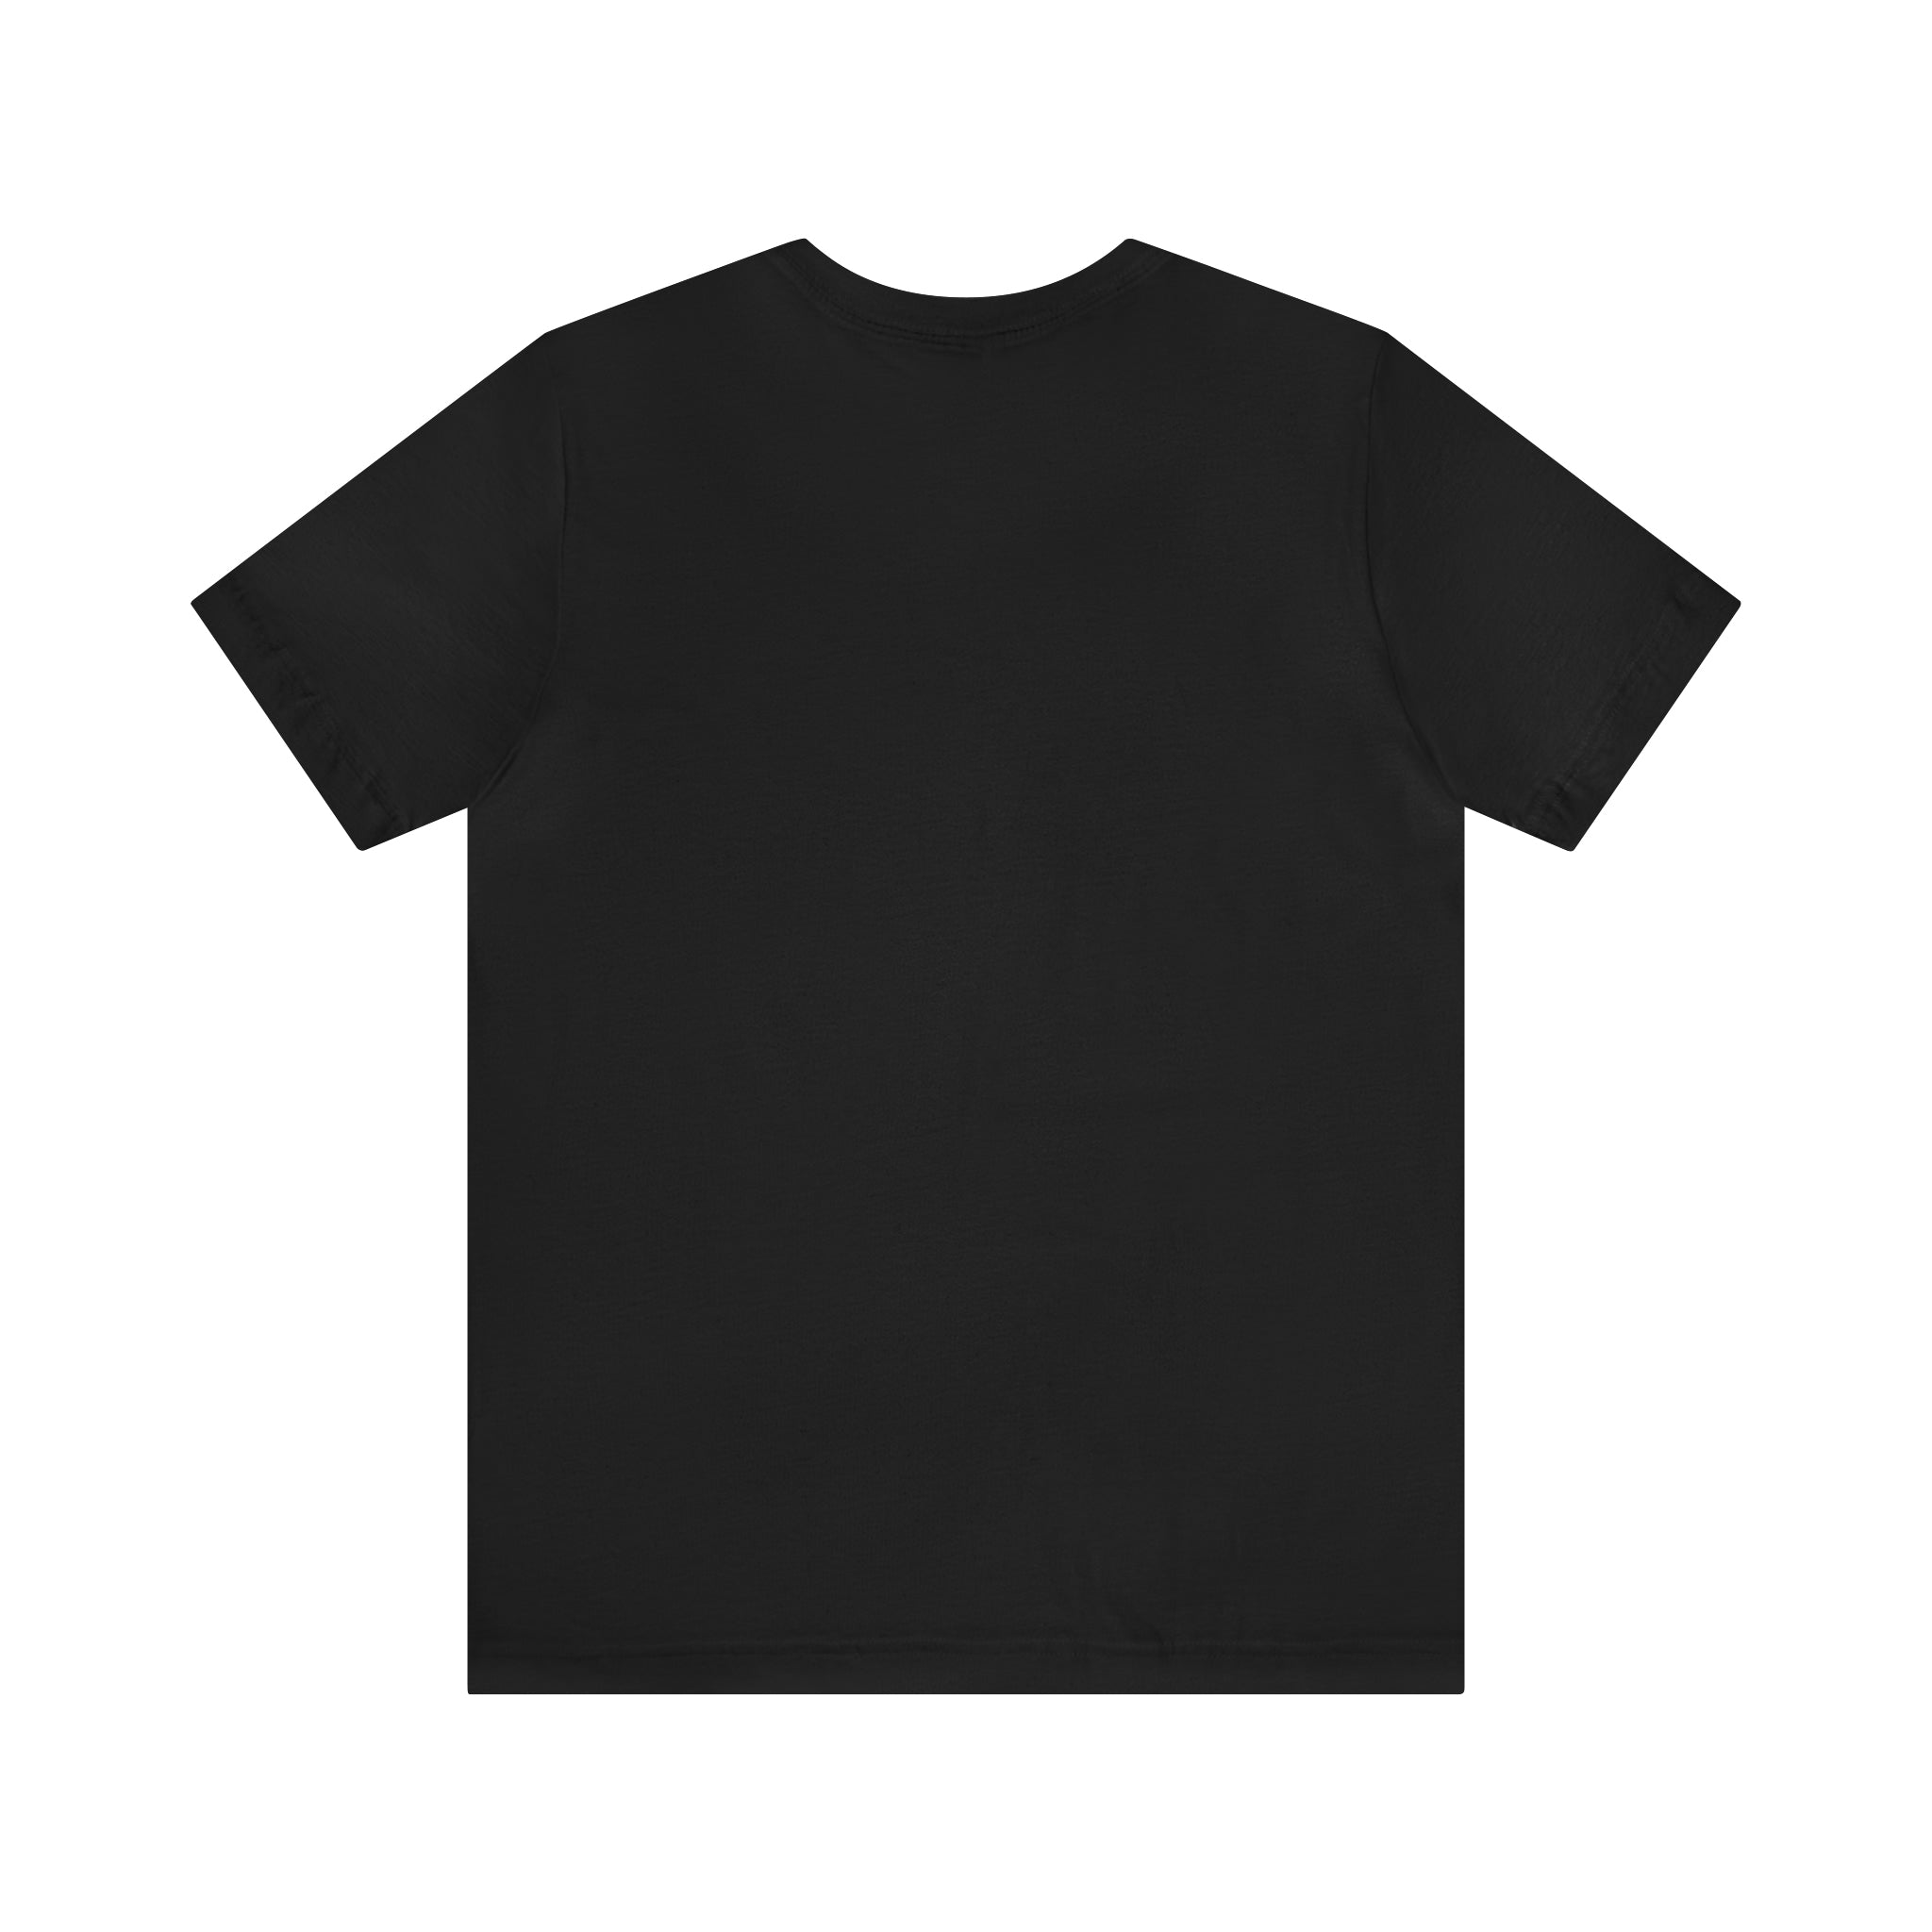 Copy of Jamesons bday shirt- guys Unisex Jersey Short Sleeve Tee